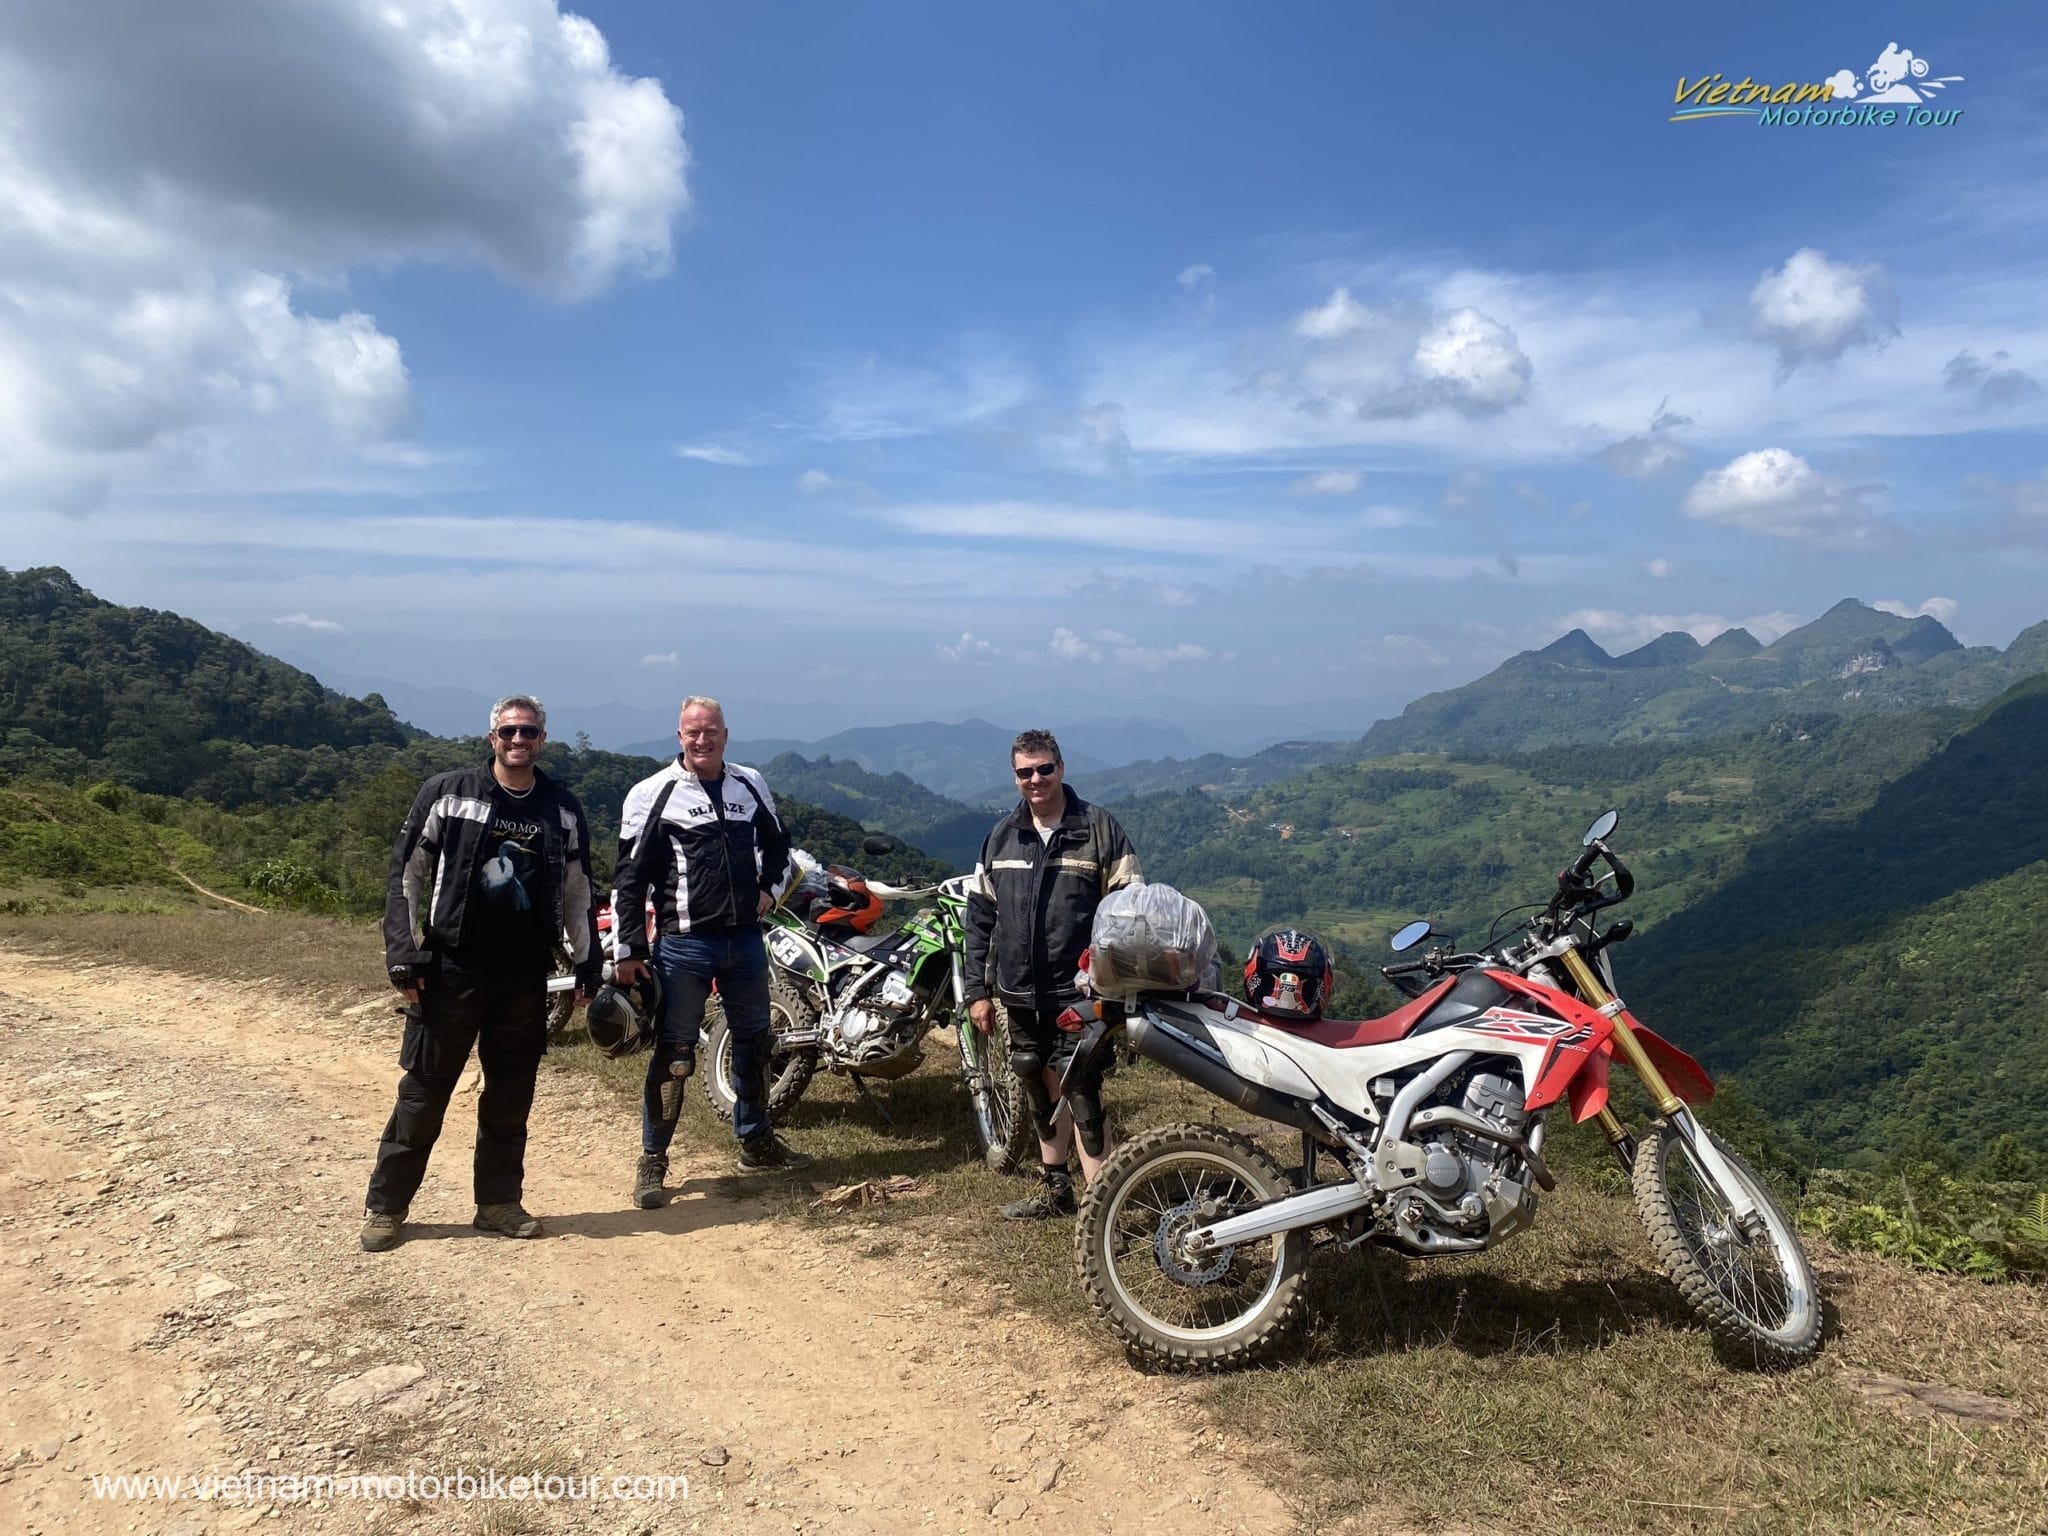 Tuan Giao Motorbike Tour to Muong Lay via Dien Bien Phu